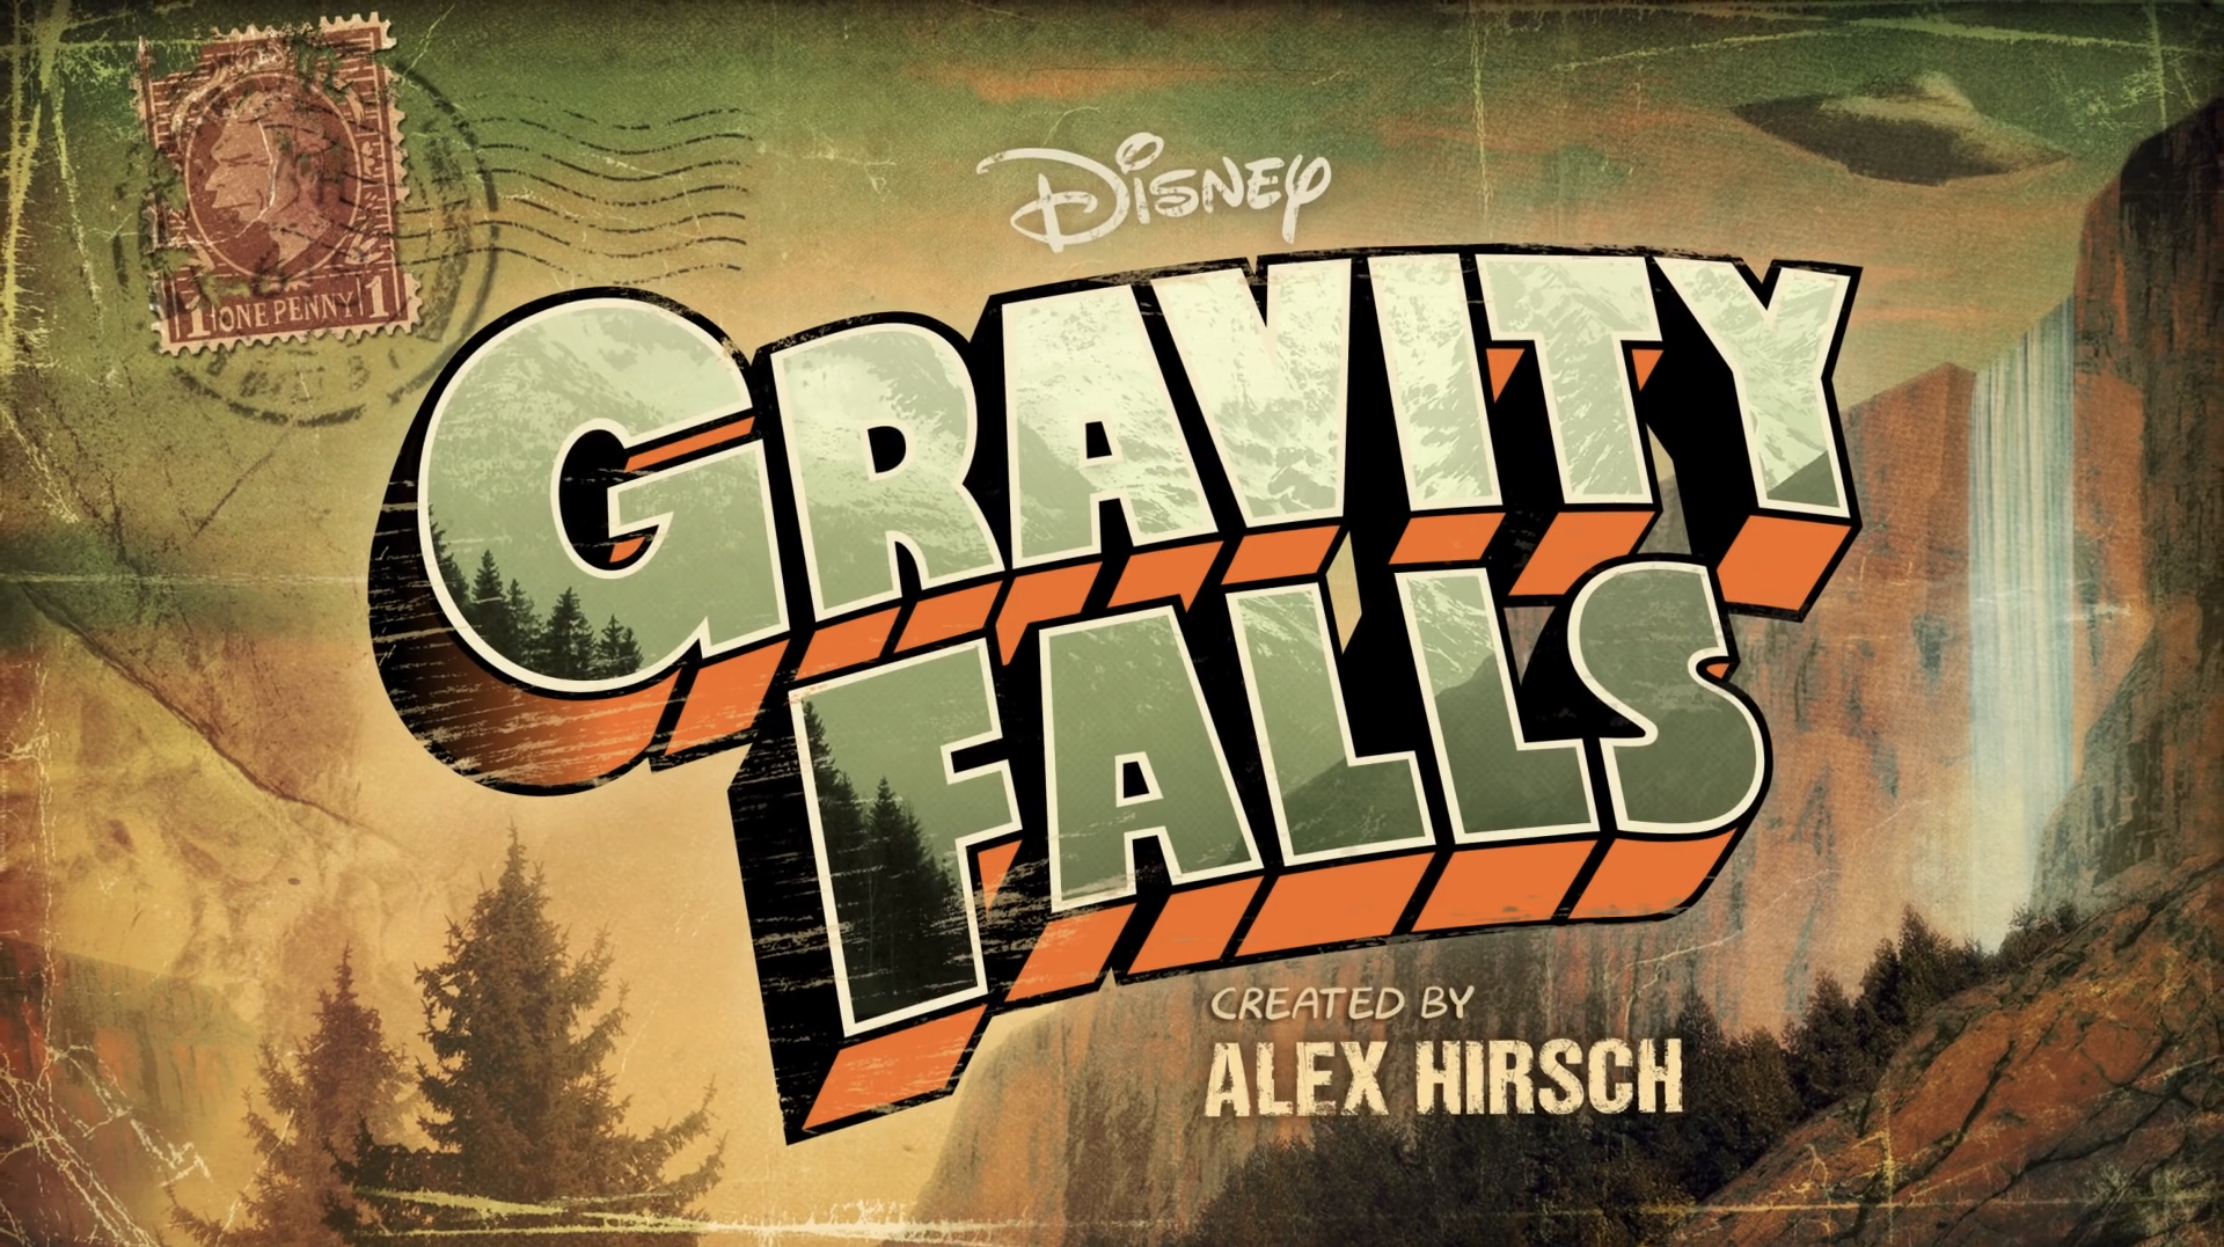 Gravity falls logo.jpeg